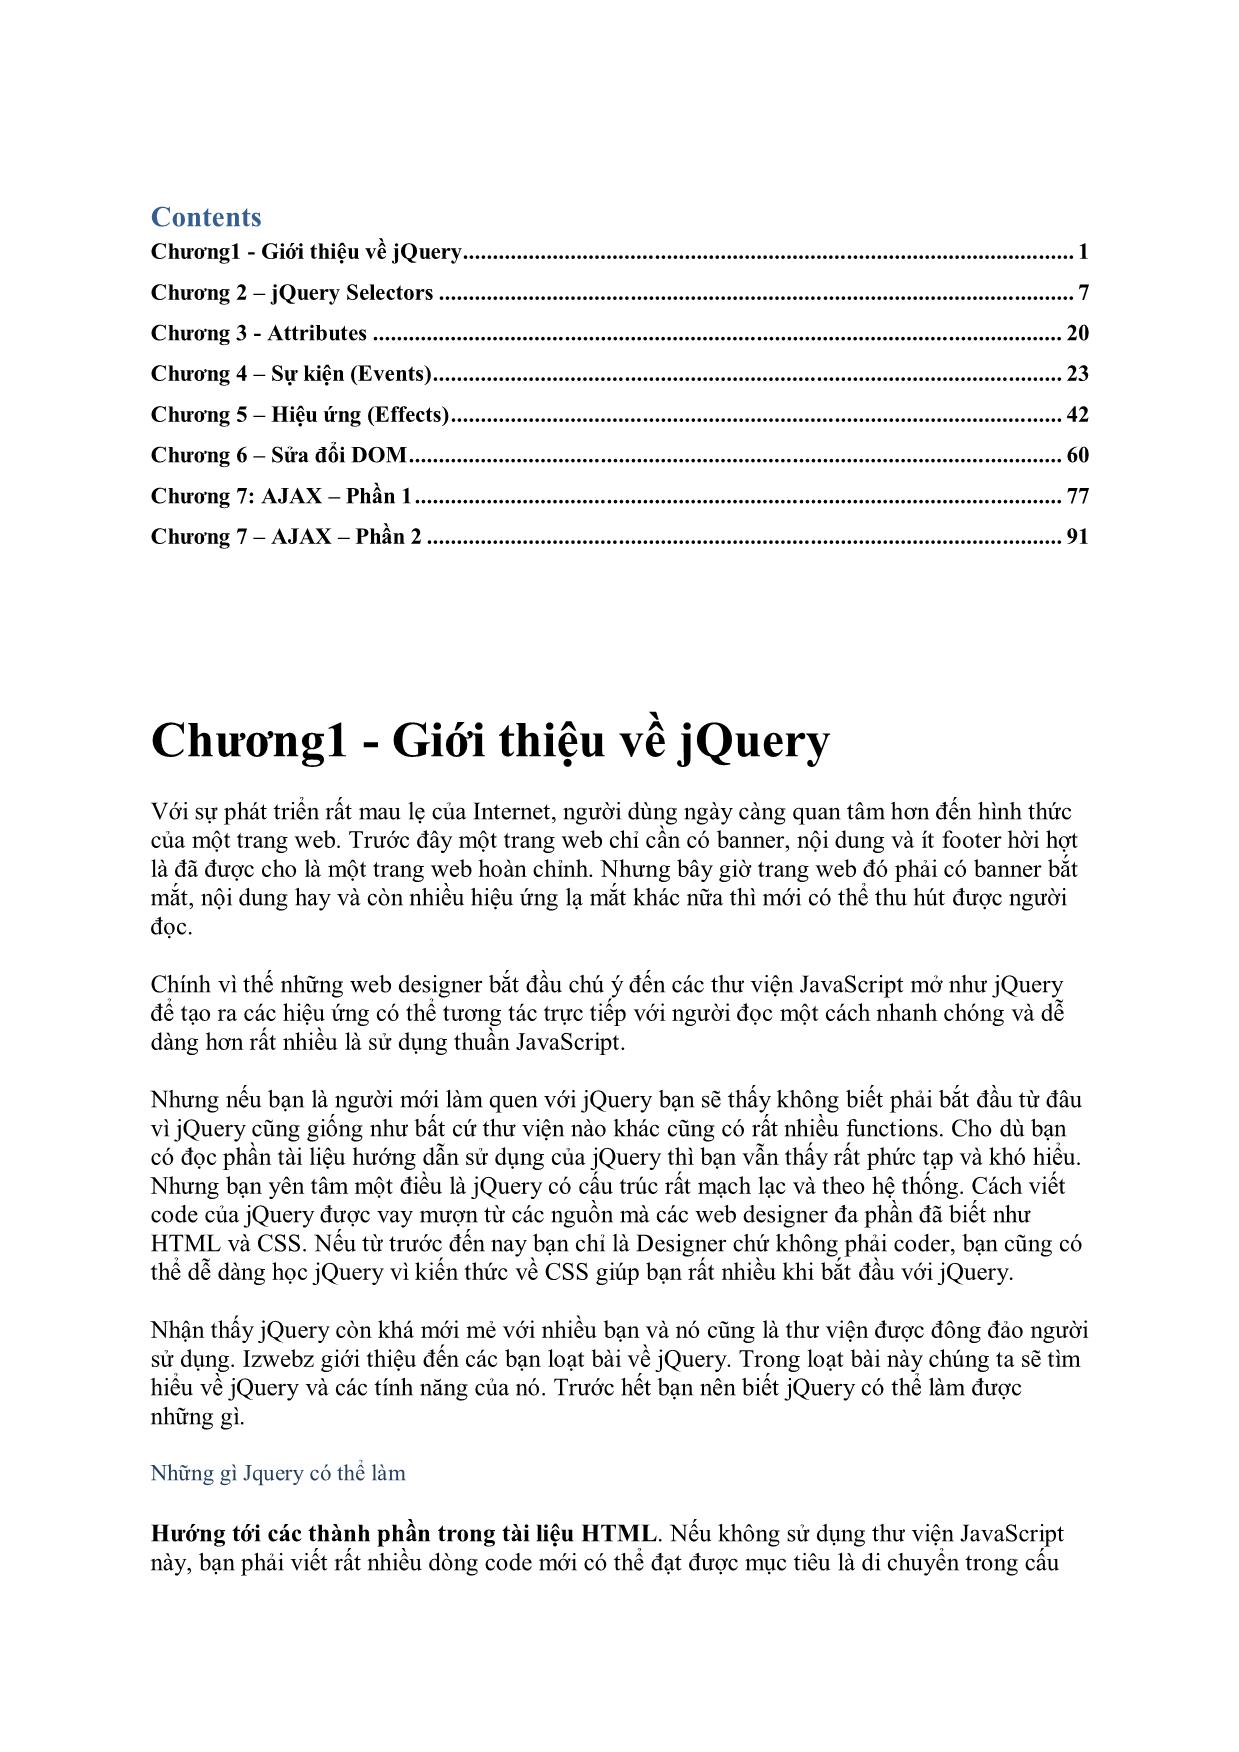 JQuery trang 1